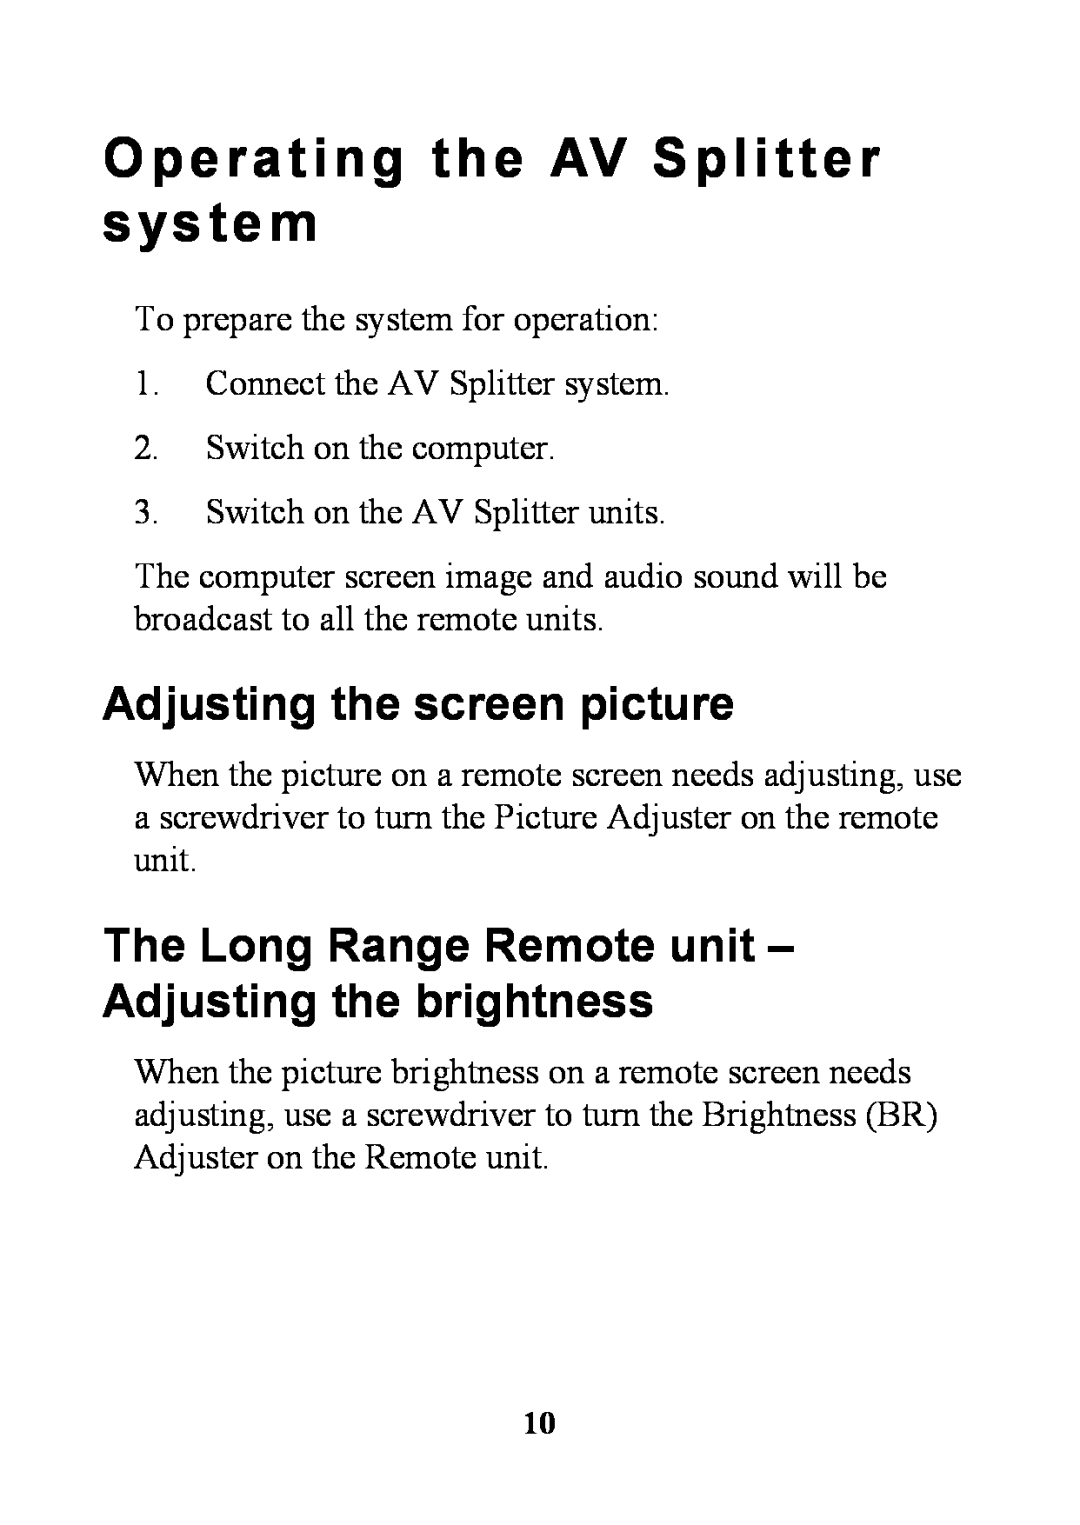 Minicom Advanced Systems 5UM40066 - V1 8/01 manual Operating the AV Splitter system, Adjusting the screen picture 